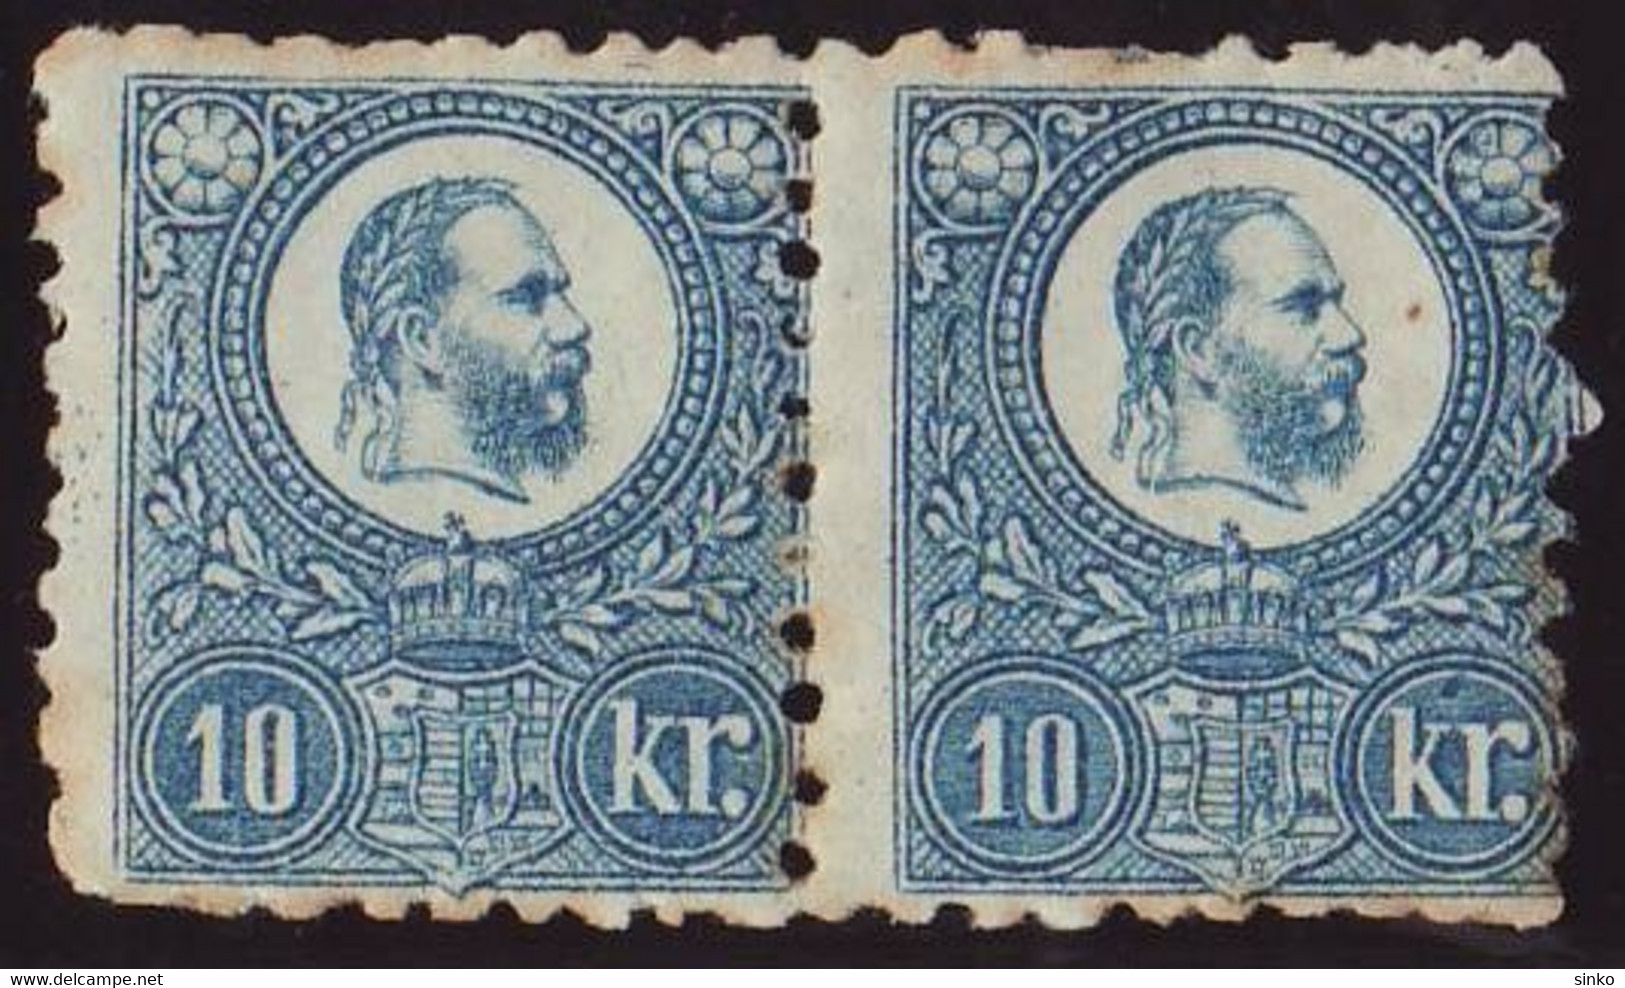 1871. Engraved 10kr Stamp Pair - Neufs